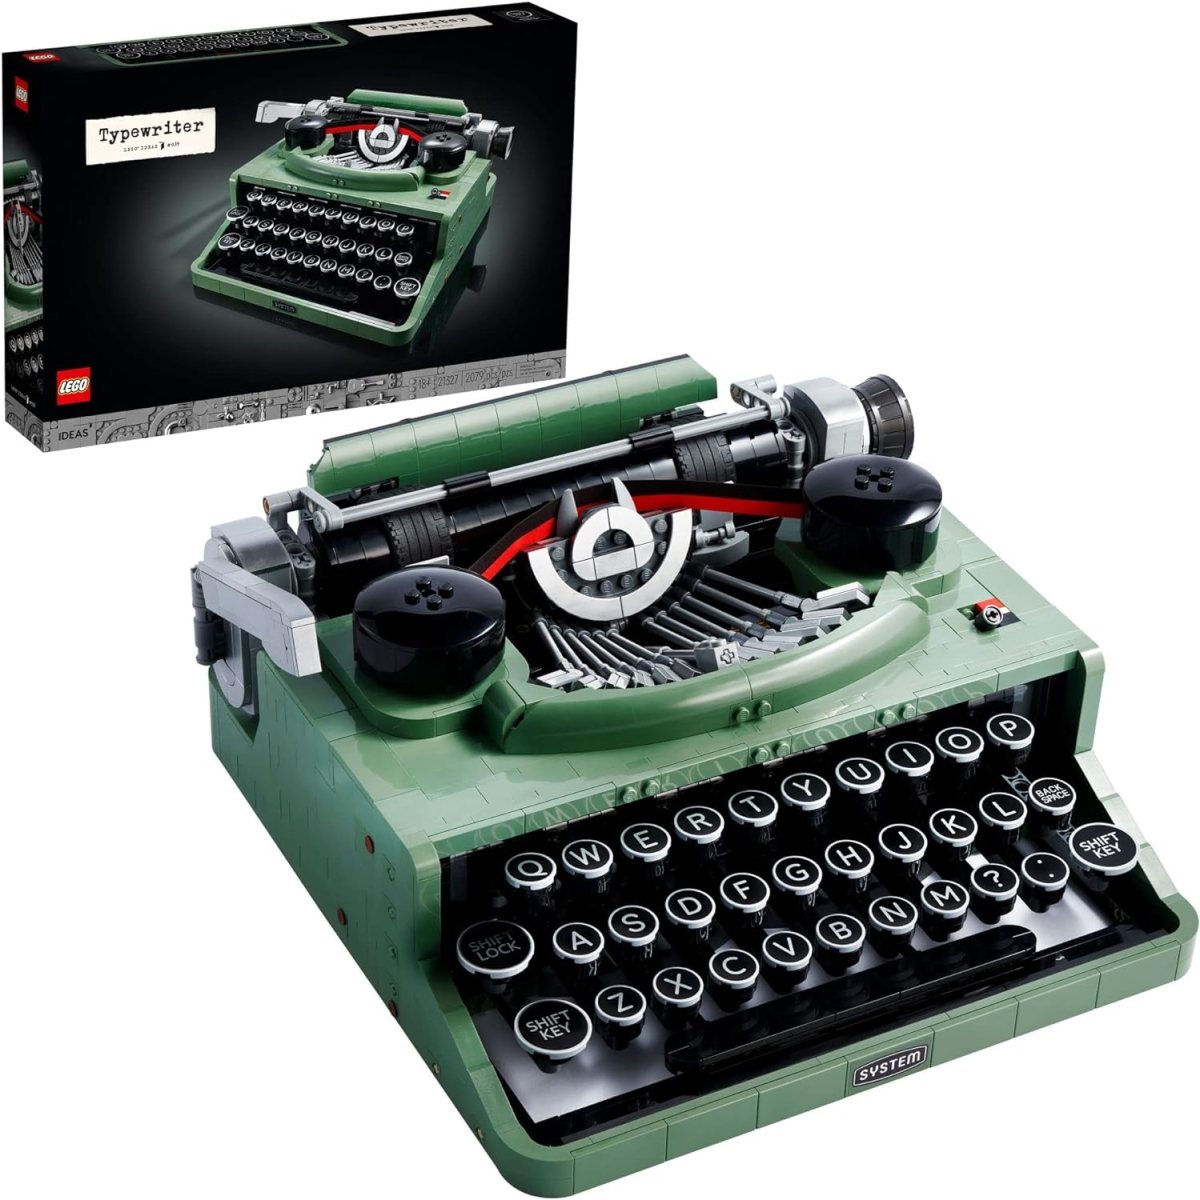 A vintage typewriter made of LEGO